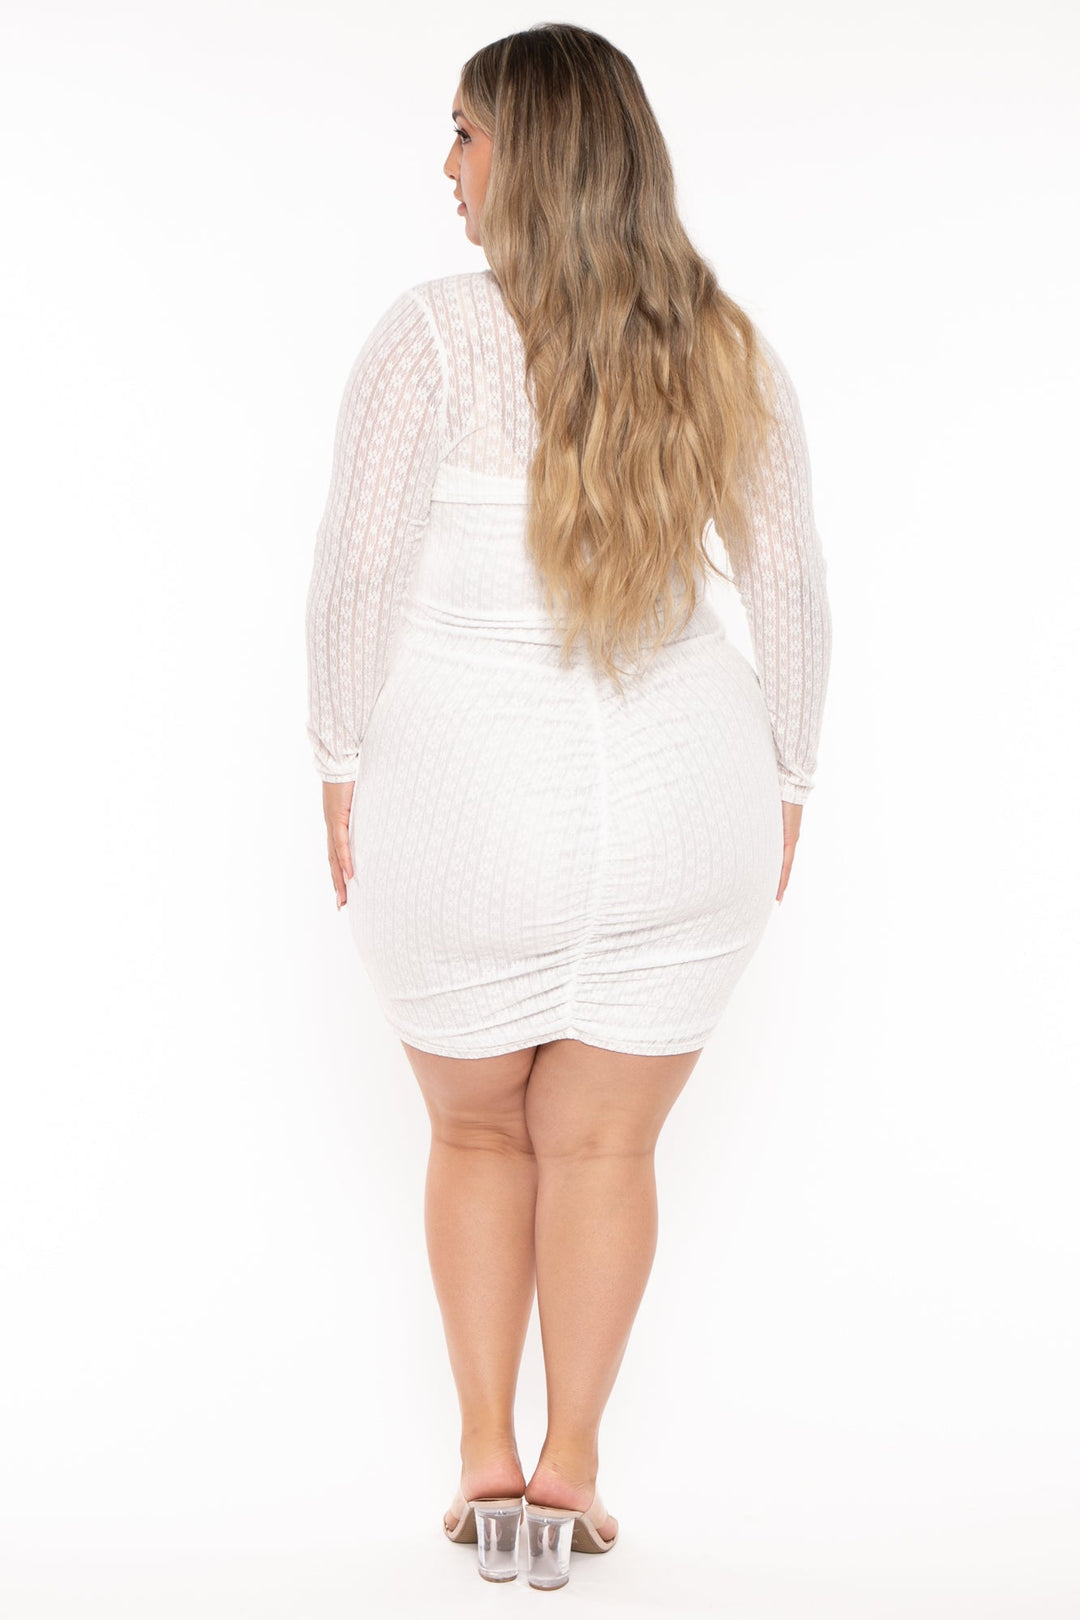 Curvy Sense Dresses Plus Size Krystal Front Ruffle With Shrug  Dress - White